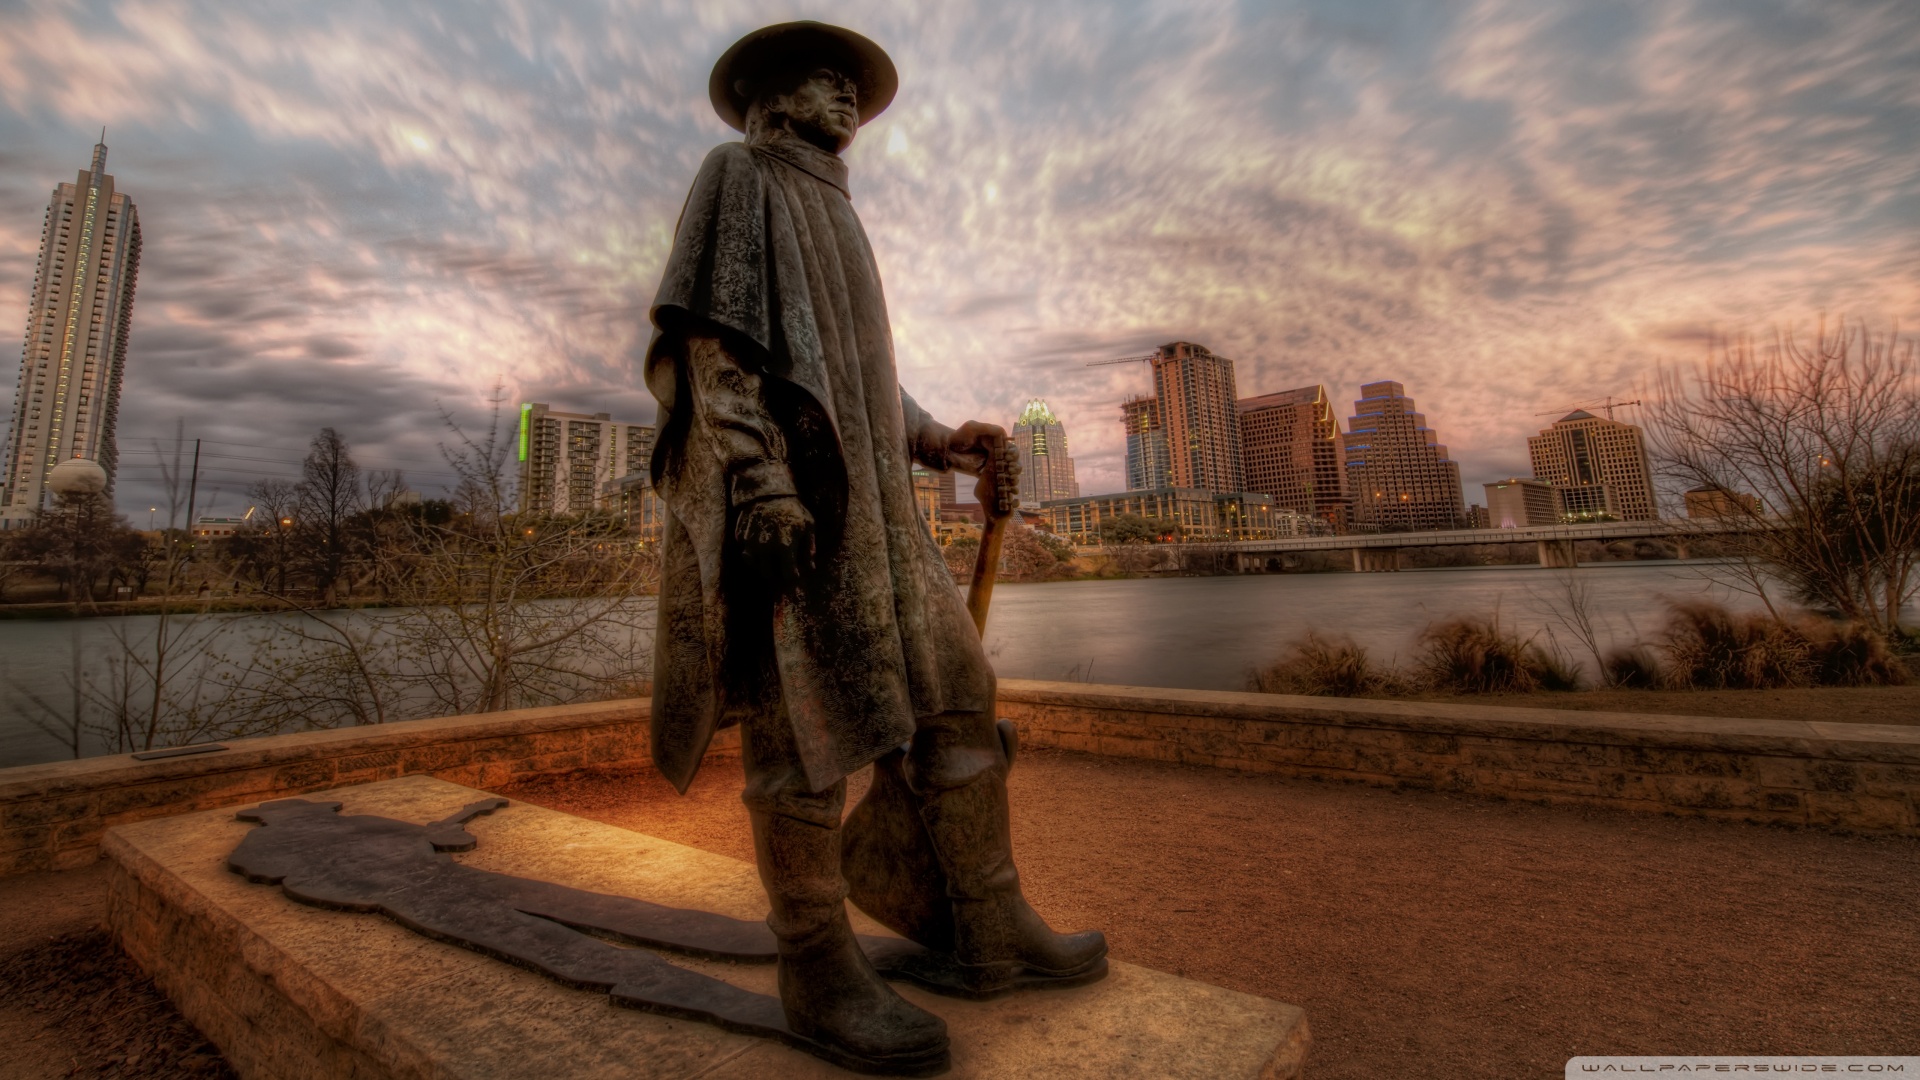 The Stevie Ray Vaughan Memorial Statue In Austin